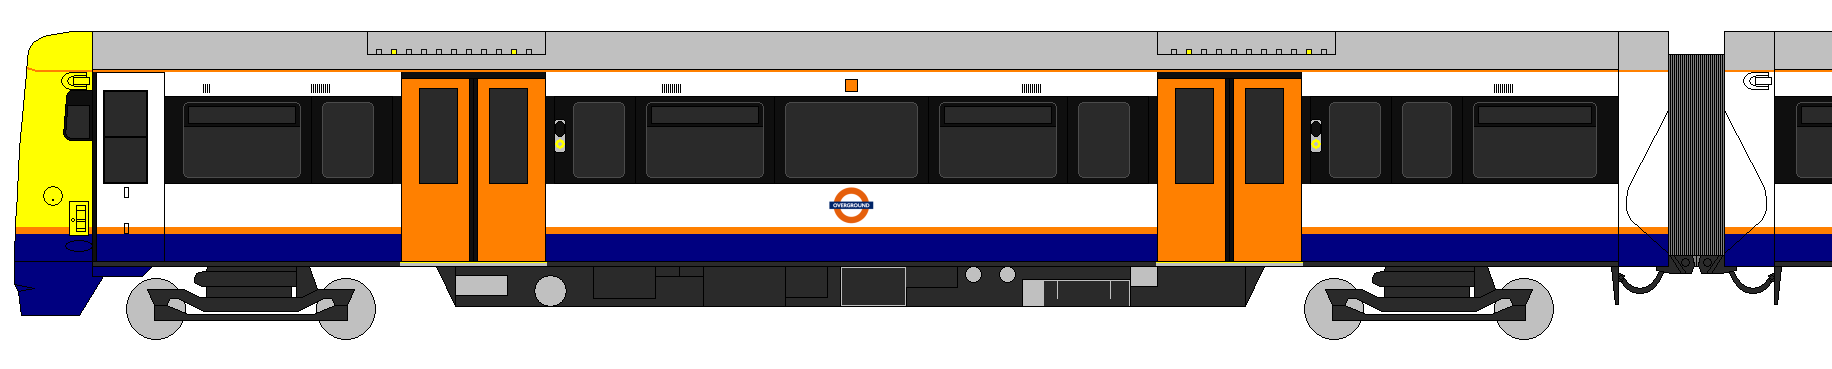 Class_378_London_Overground_Diagram detail